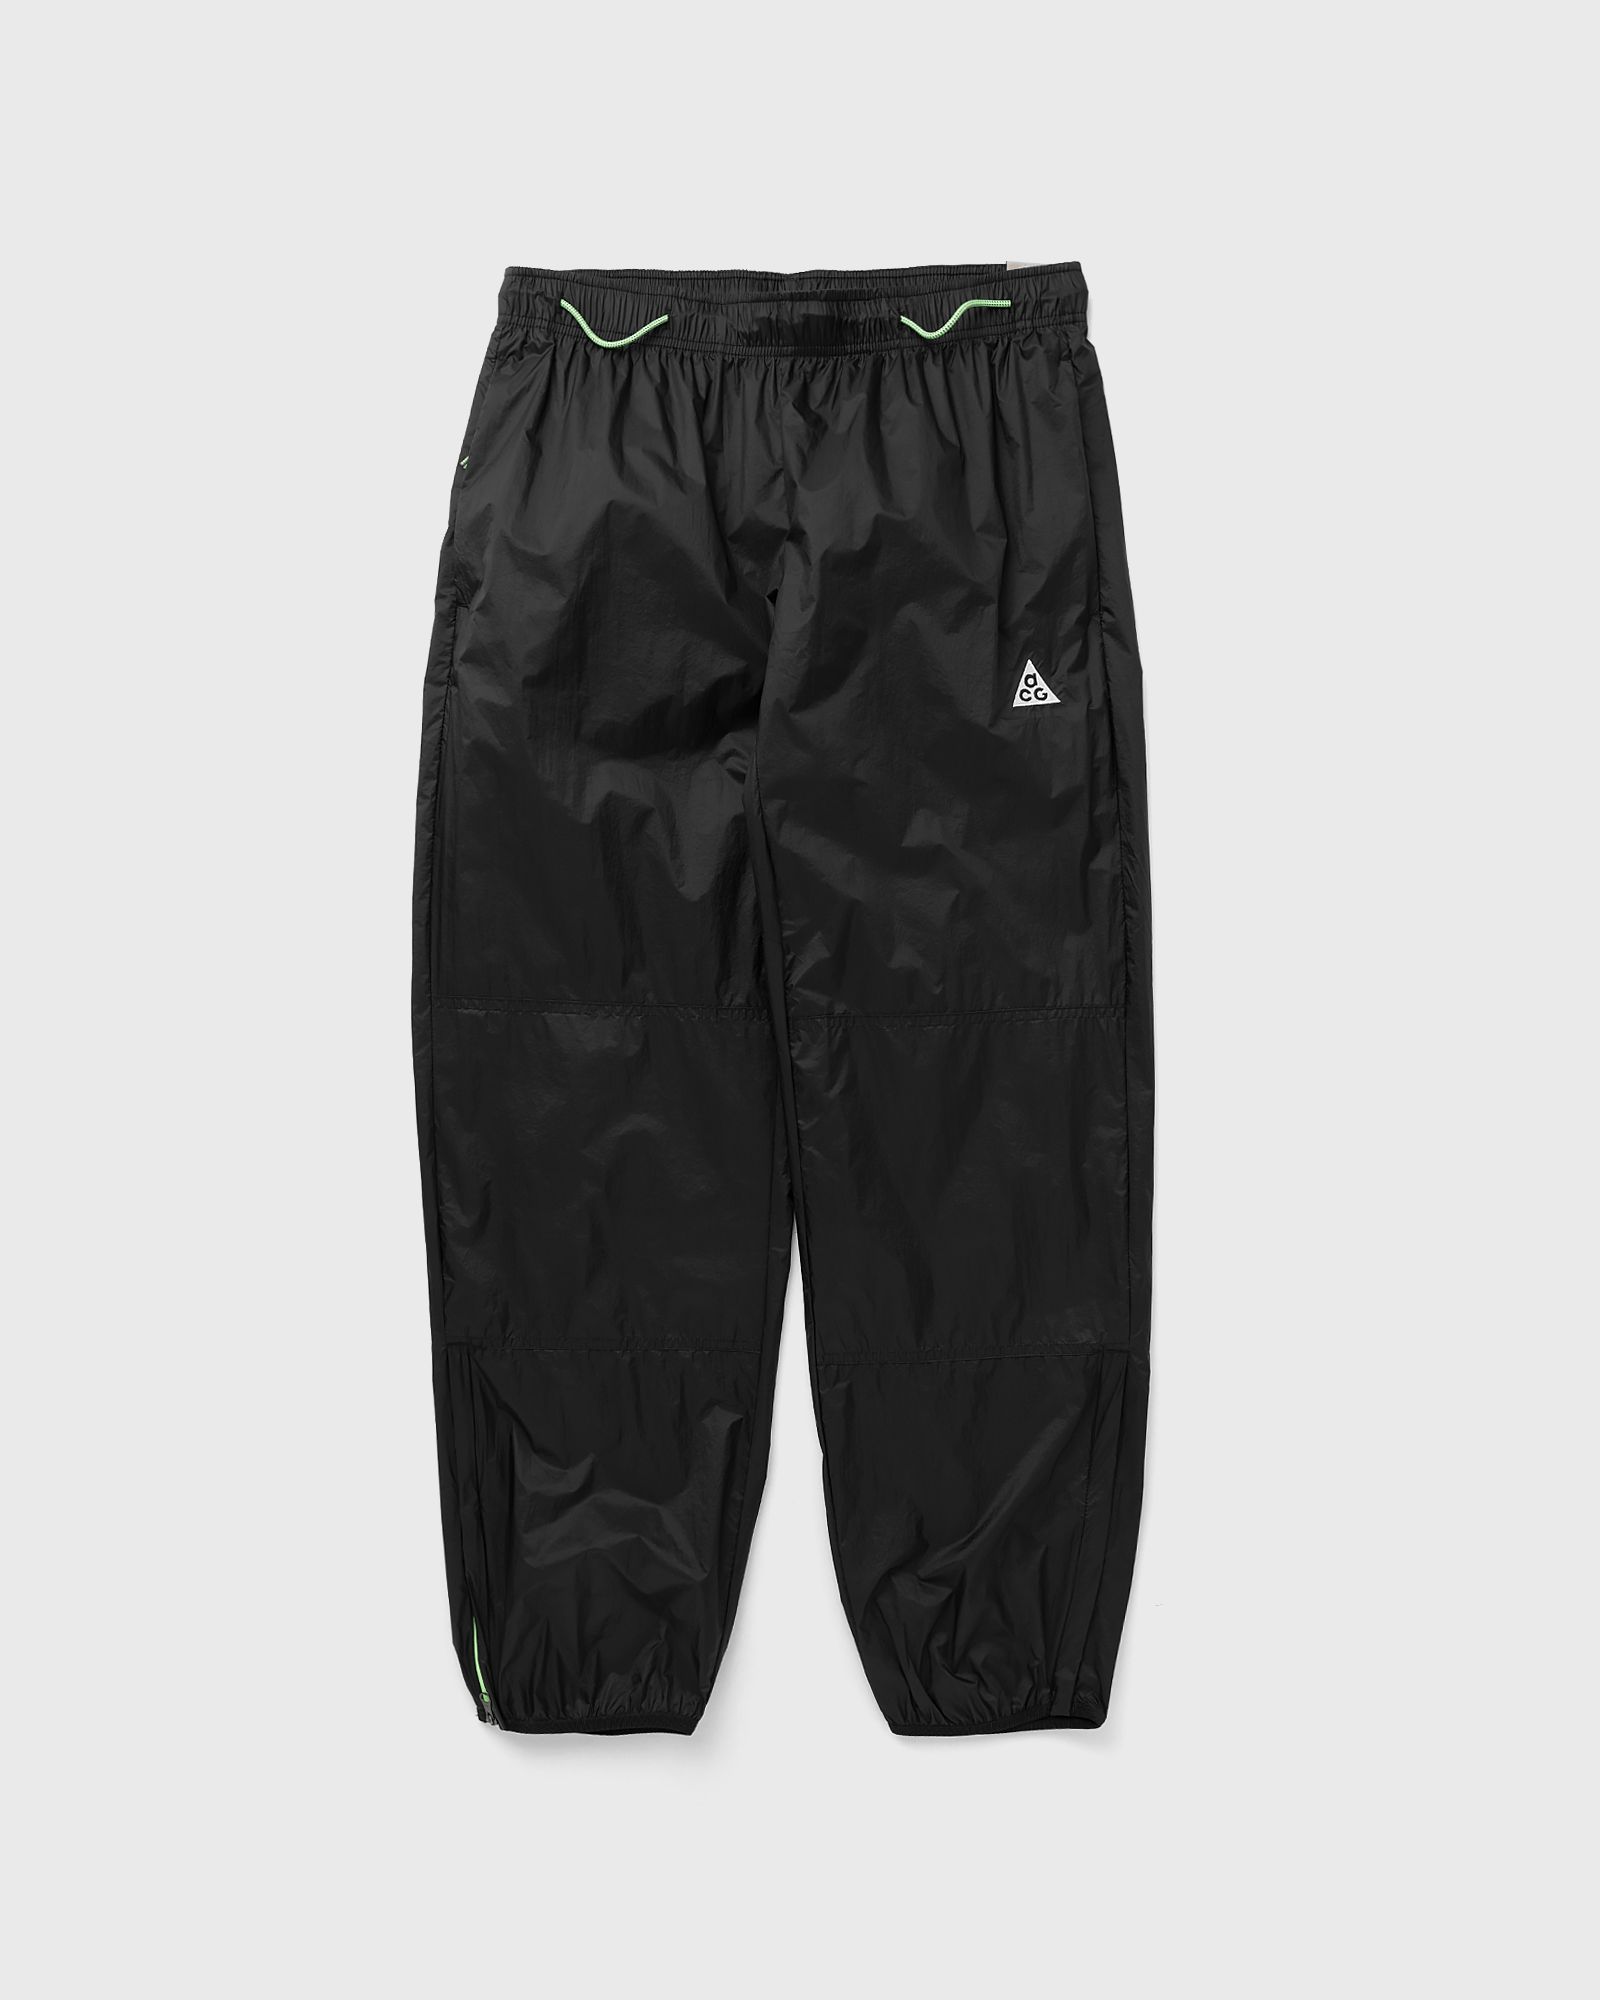 Nike - acg "cinder cone" windshell pants men track pants black in größe:xl